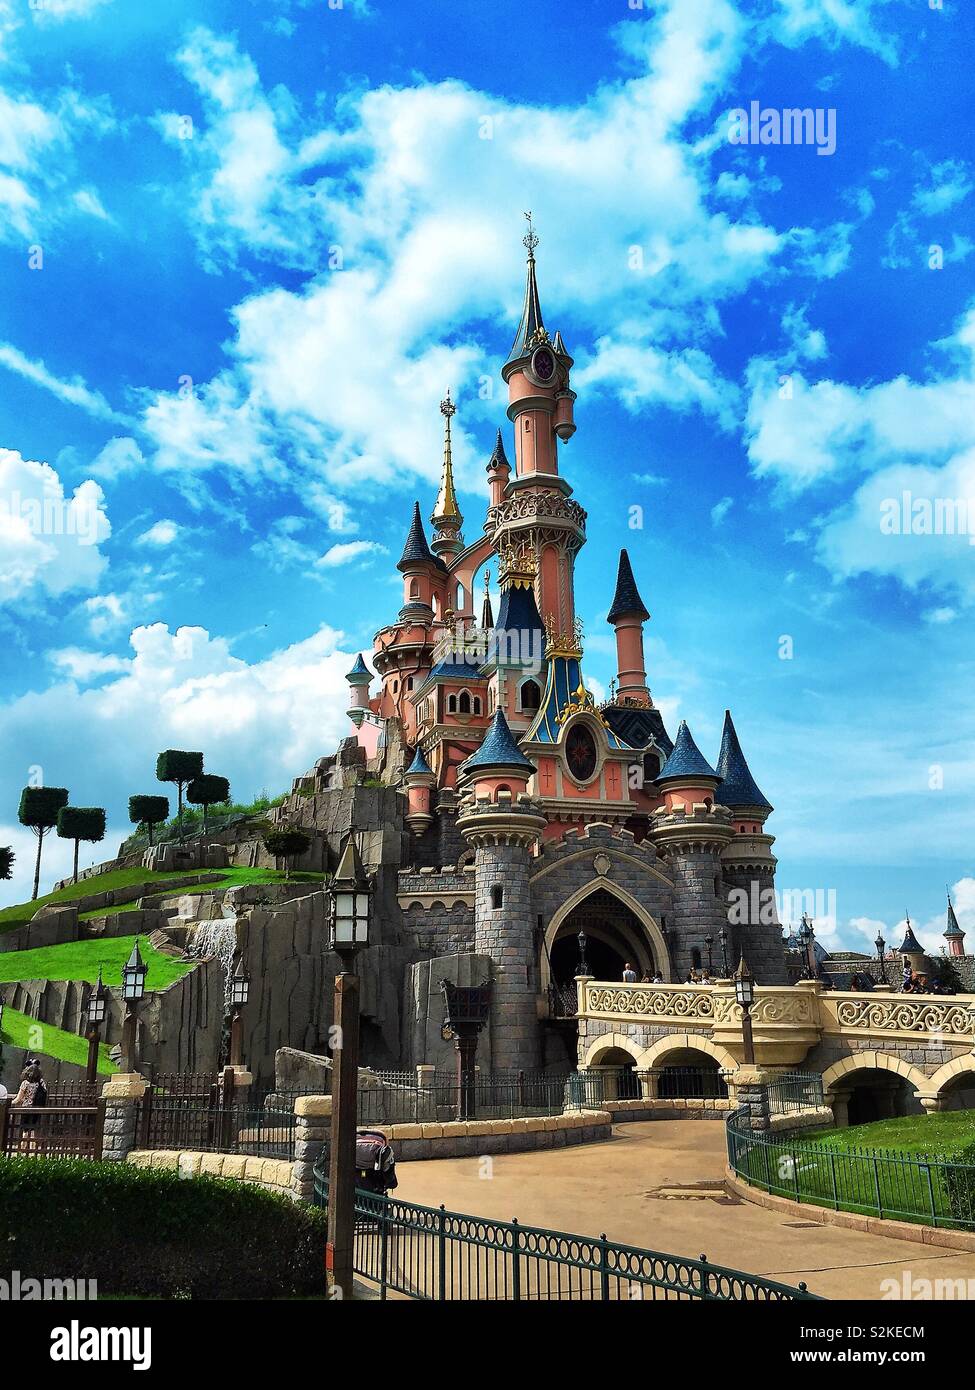 Disneyland Paris sleeping beauty castle.  Disney castle Stock Photo